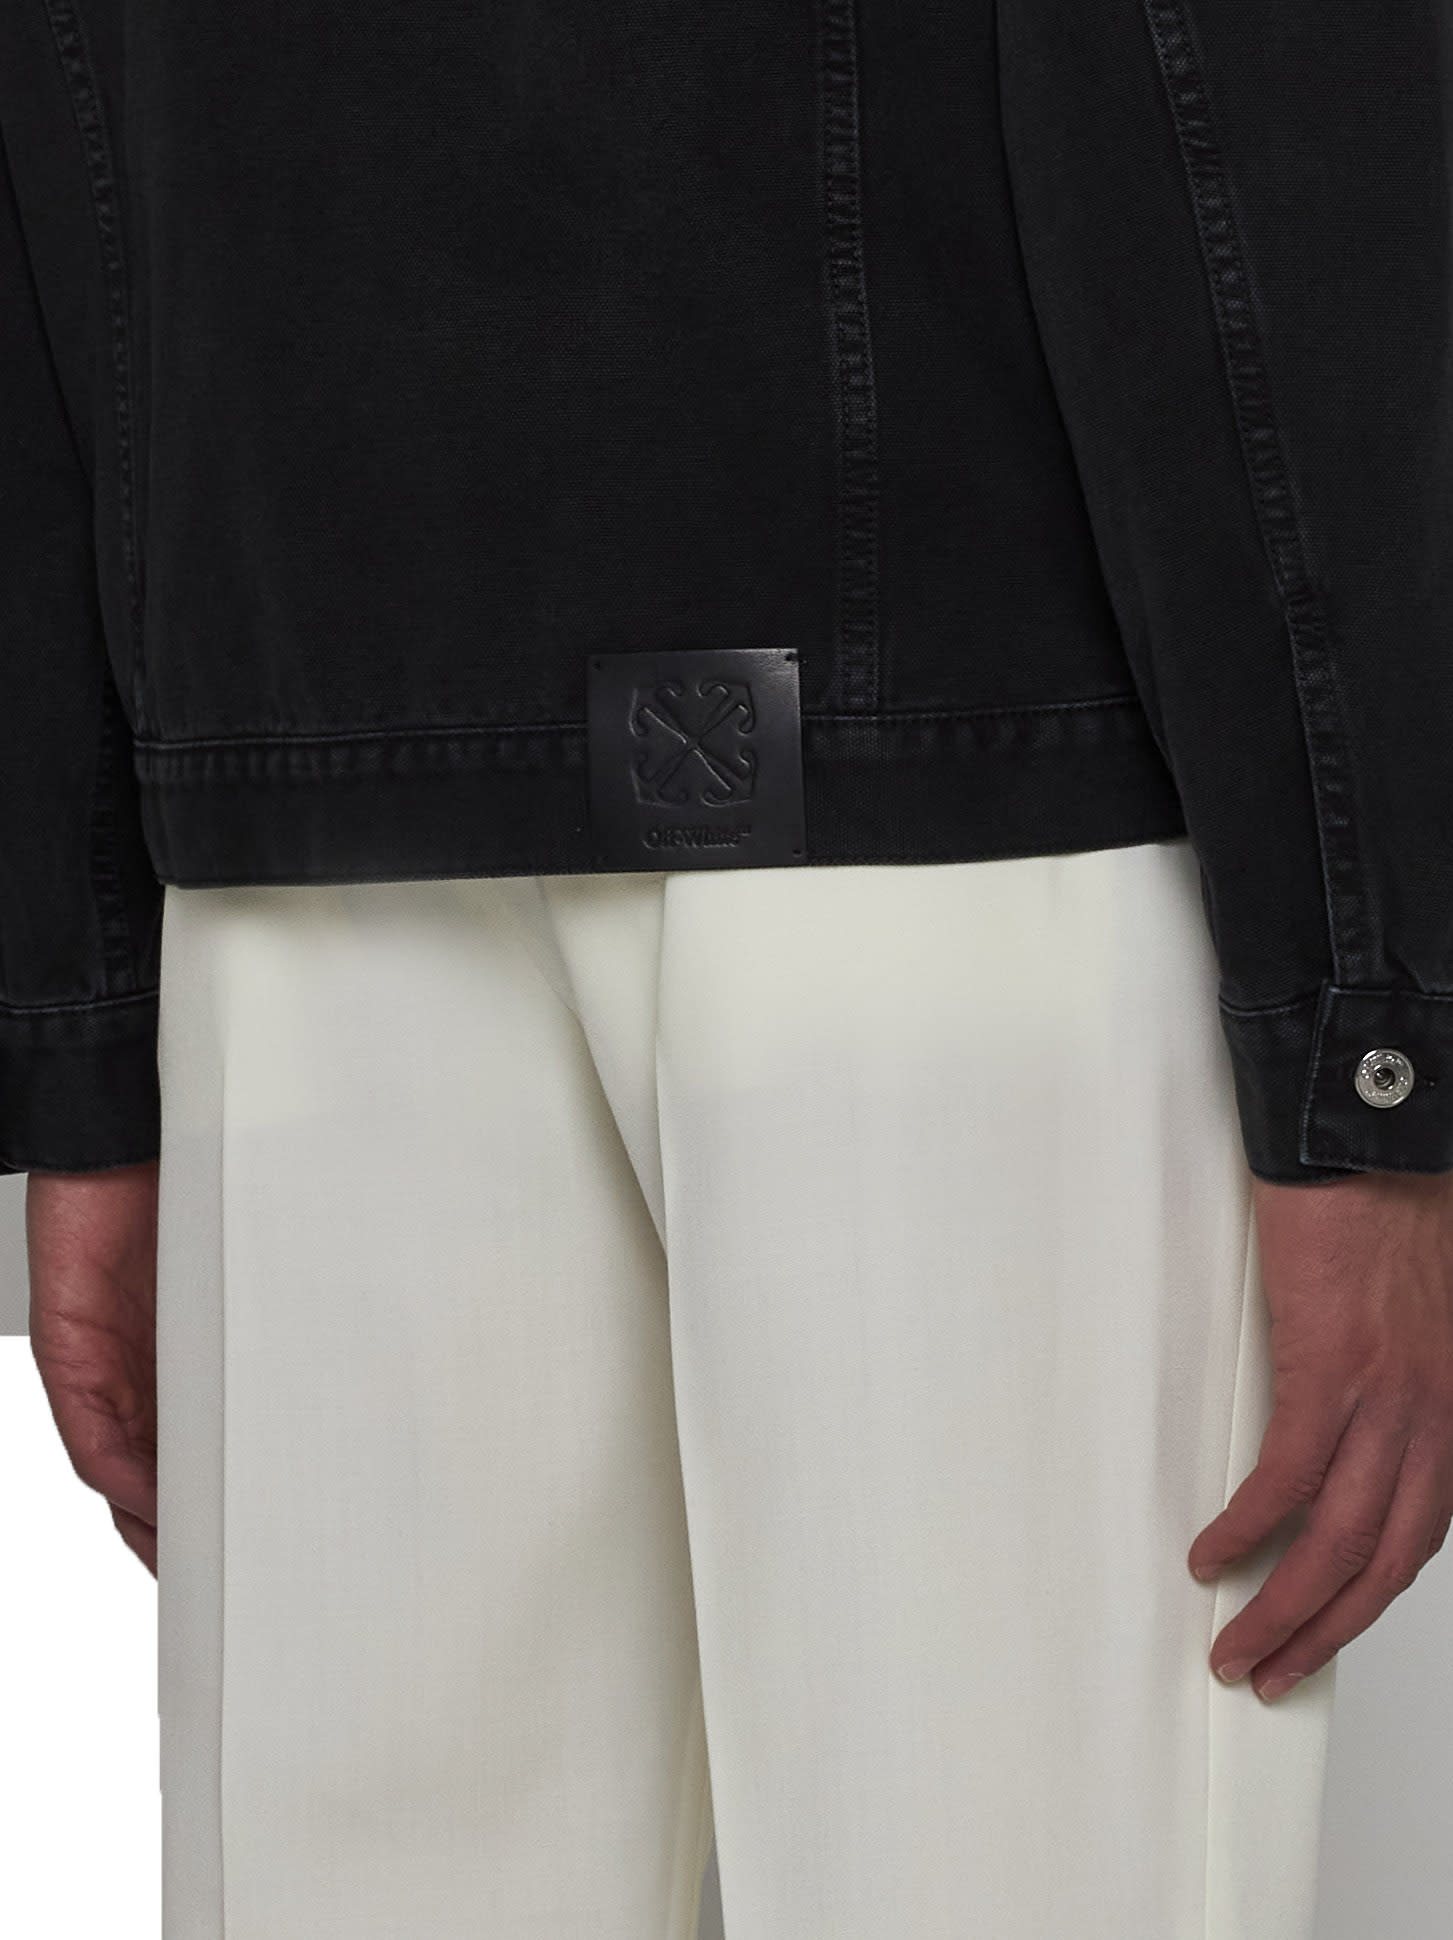 Shop Off-white Jacket In Black